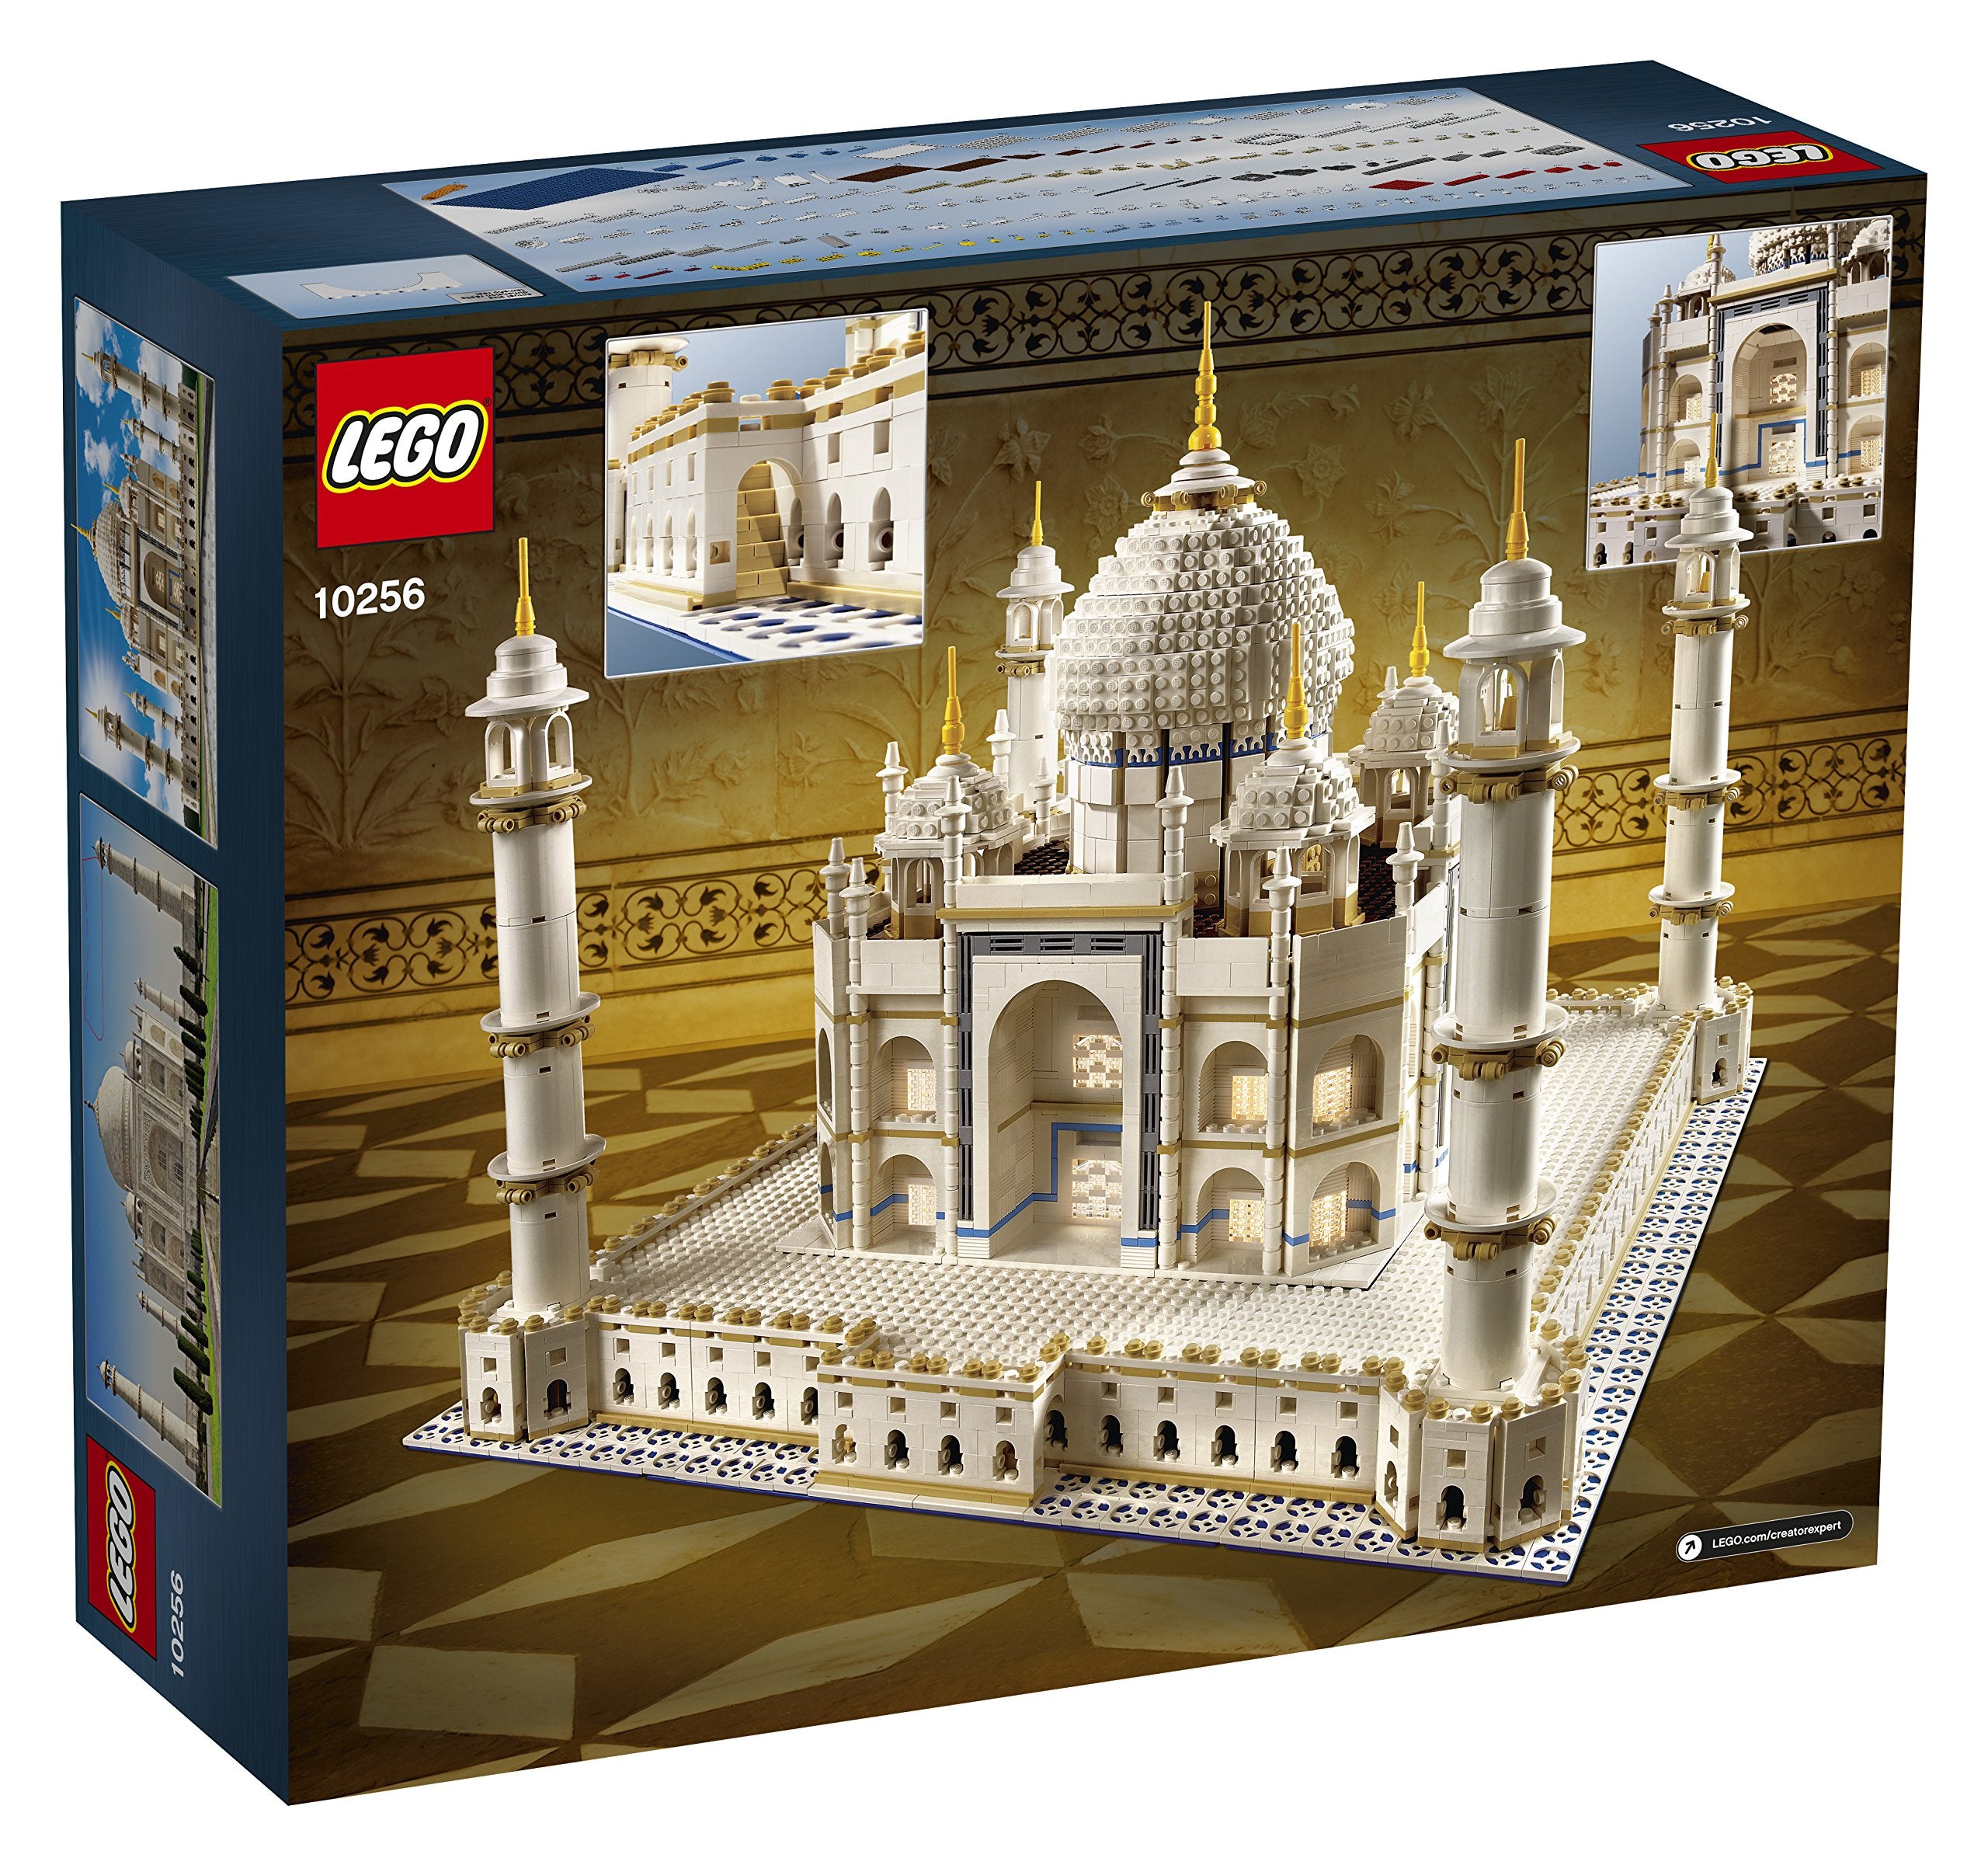 LEGO Creator Expert Taj Mahal 10256 Building Kit (5923 Piece) — BlueProton